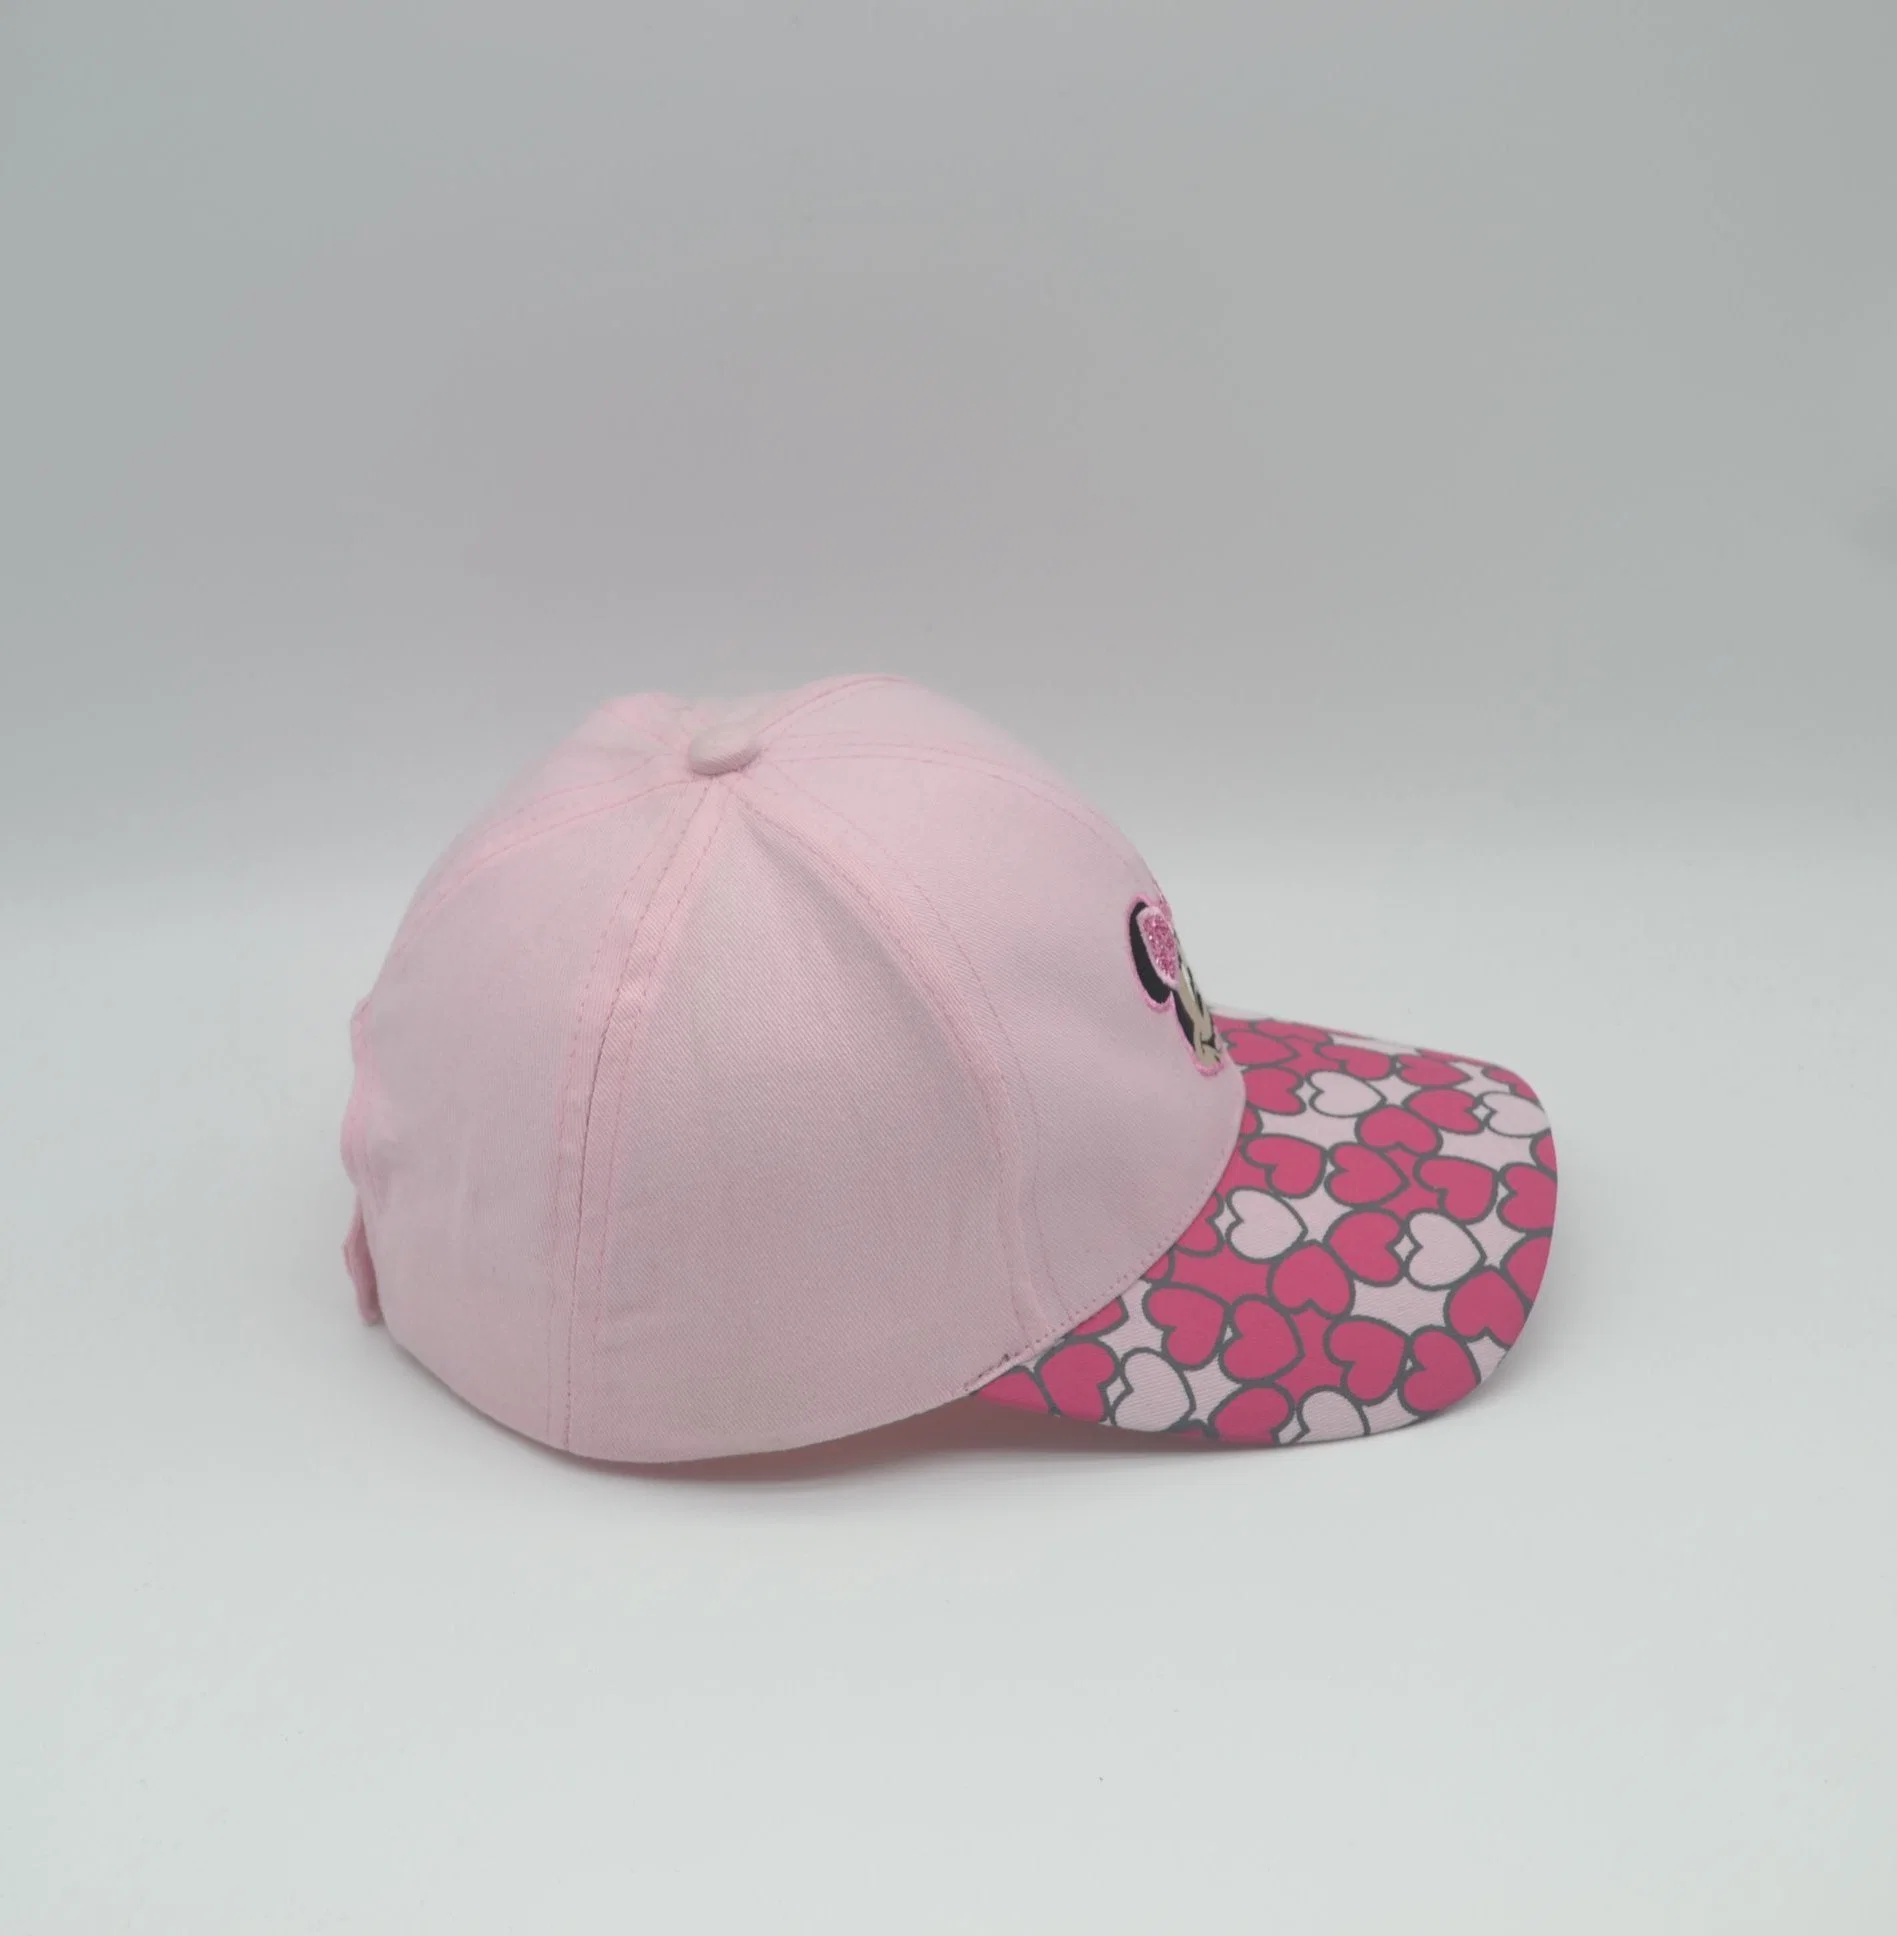 Rato de bonés Fashion Pink, 100% algodão Mickey Style Minnie Girls, bonés de basebol para exteriores